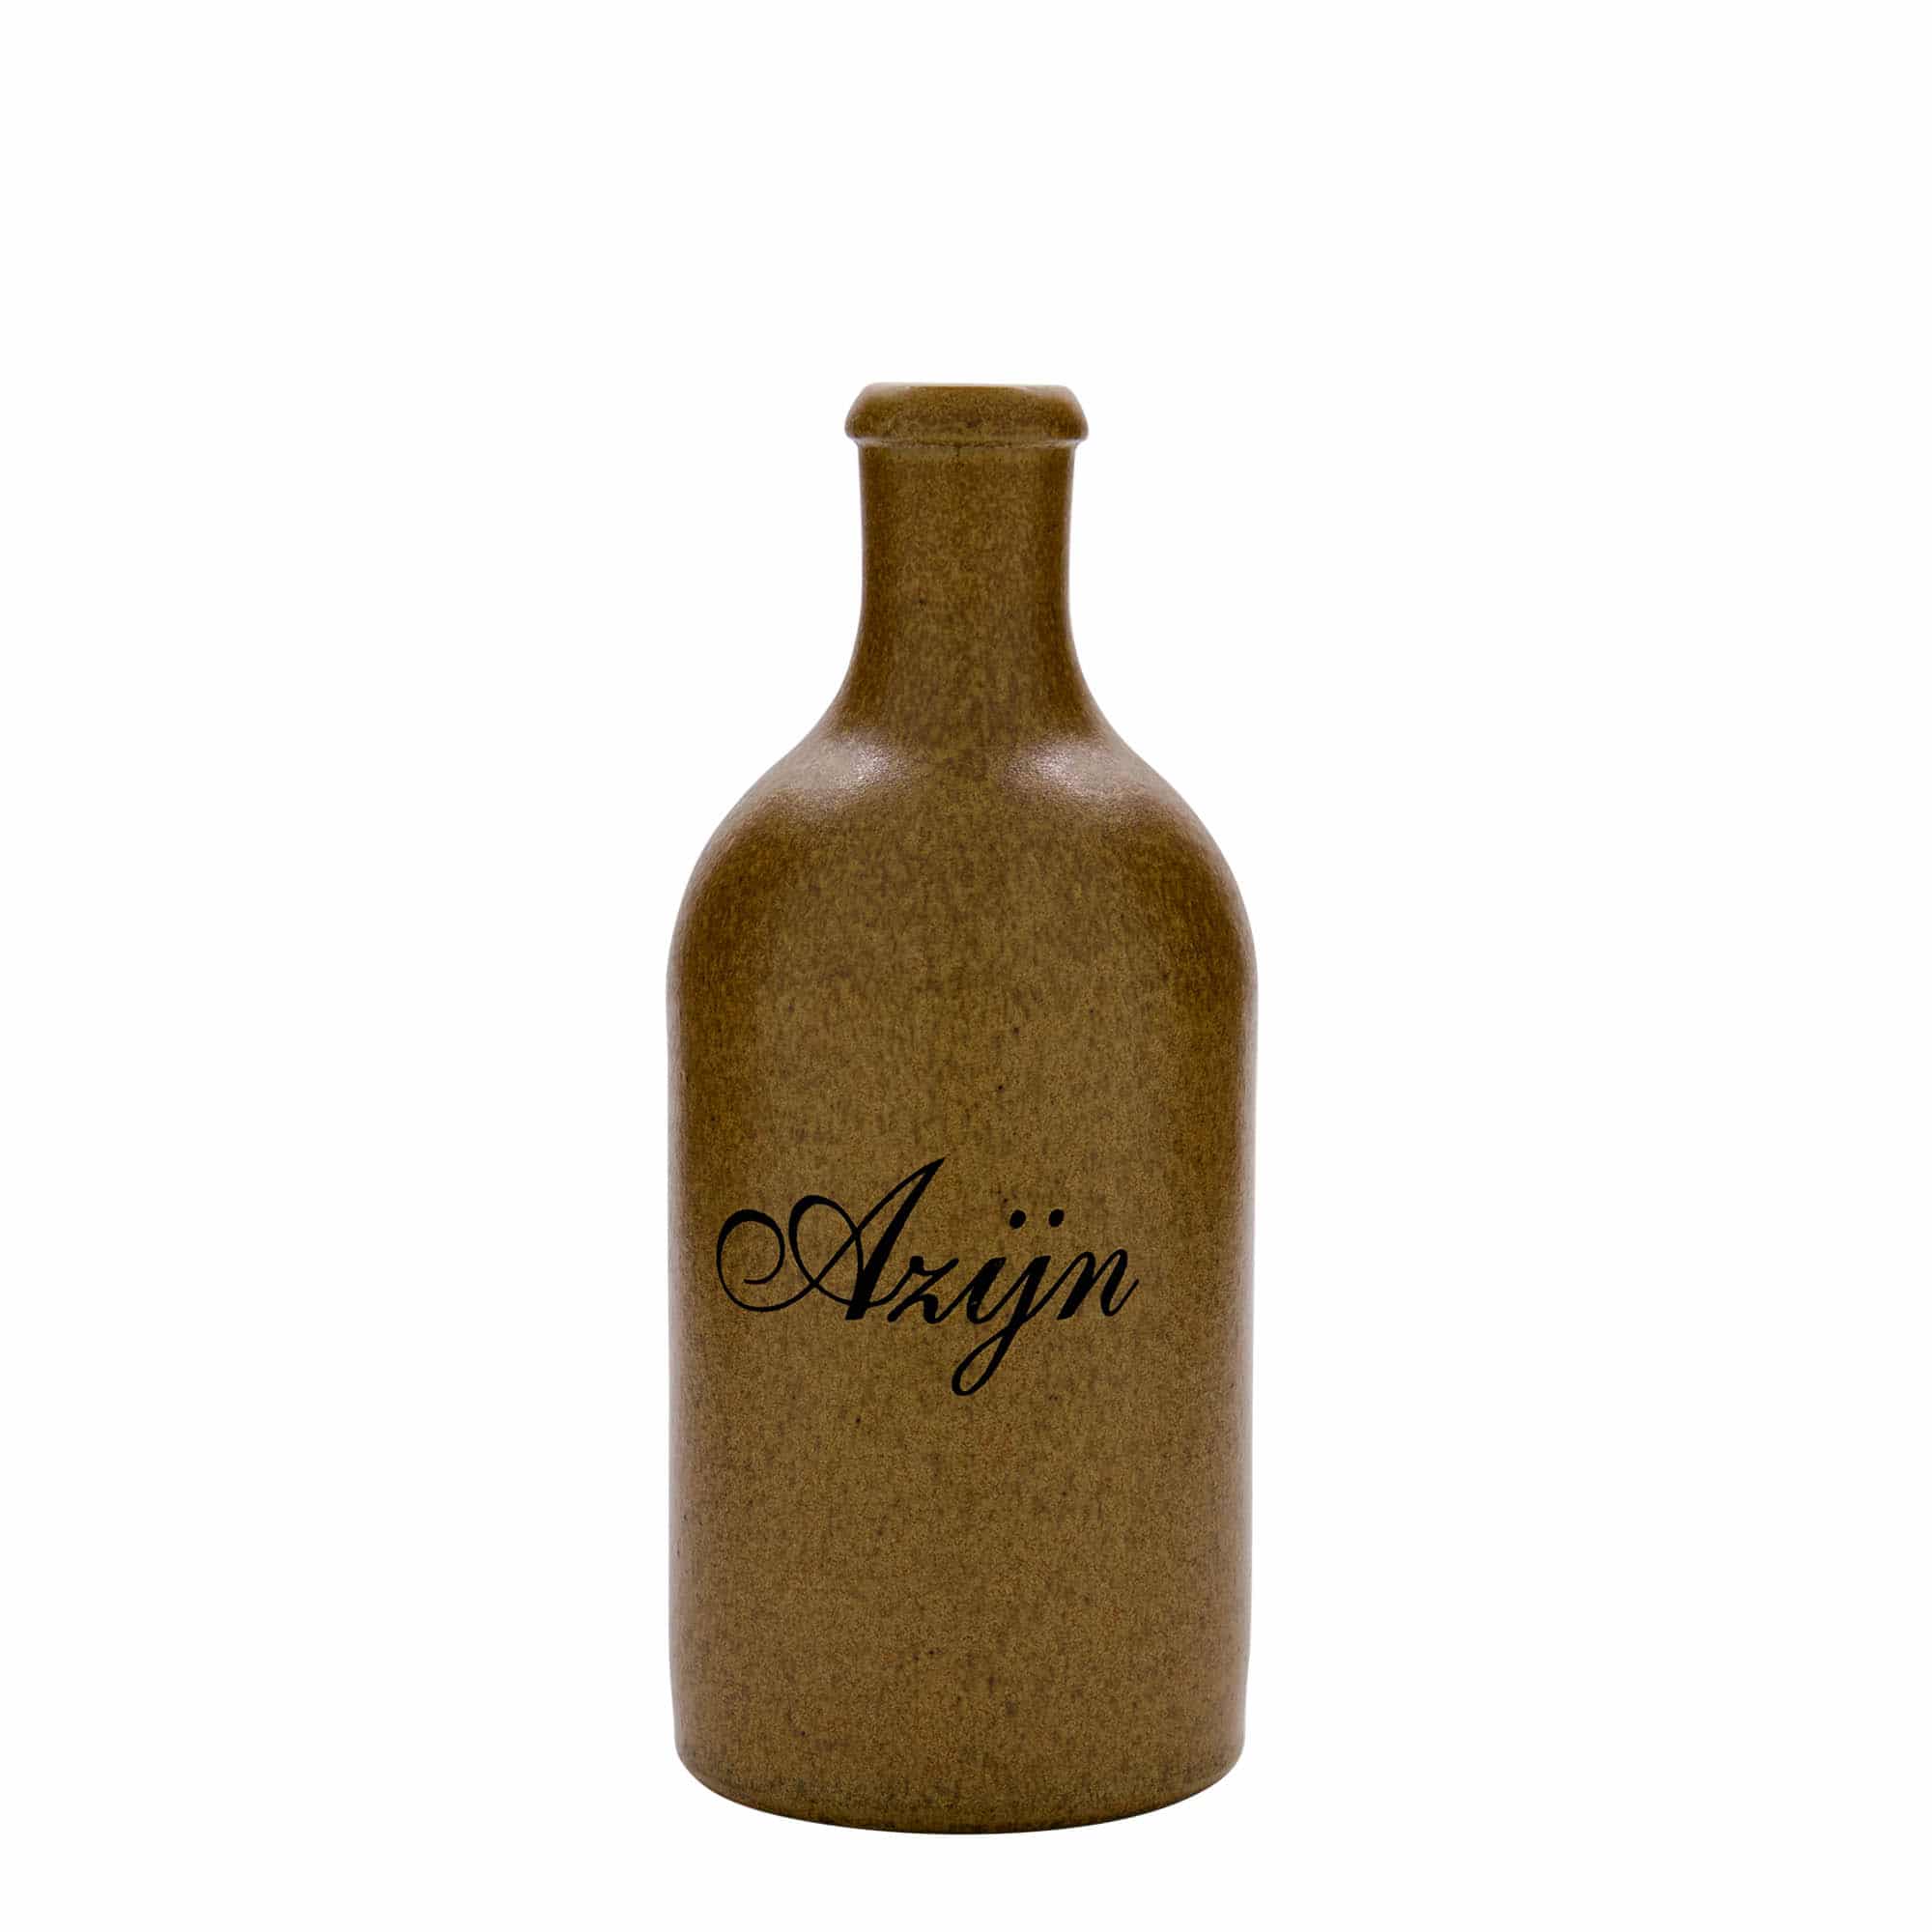 500 ml earthen jug, print: “Azijn”, stoneware, brown crystal, closure: cork